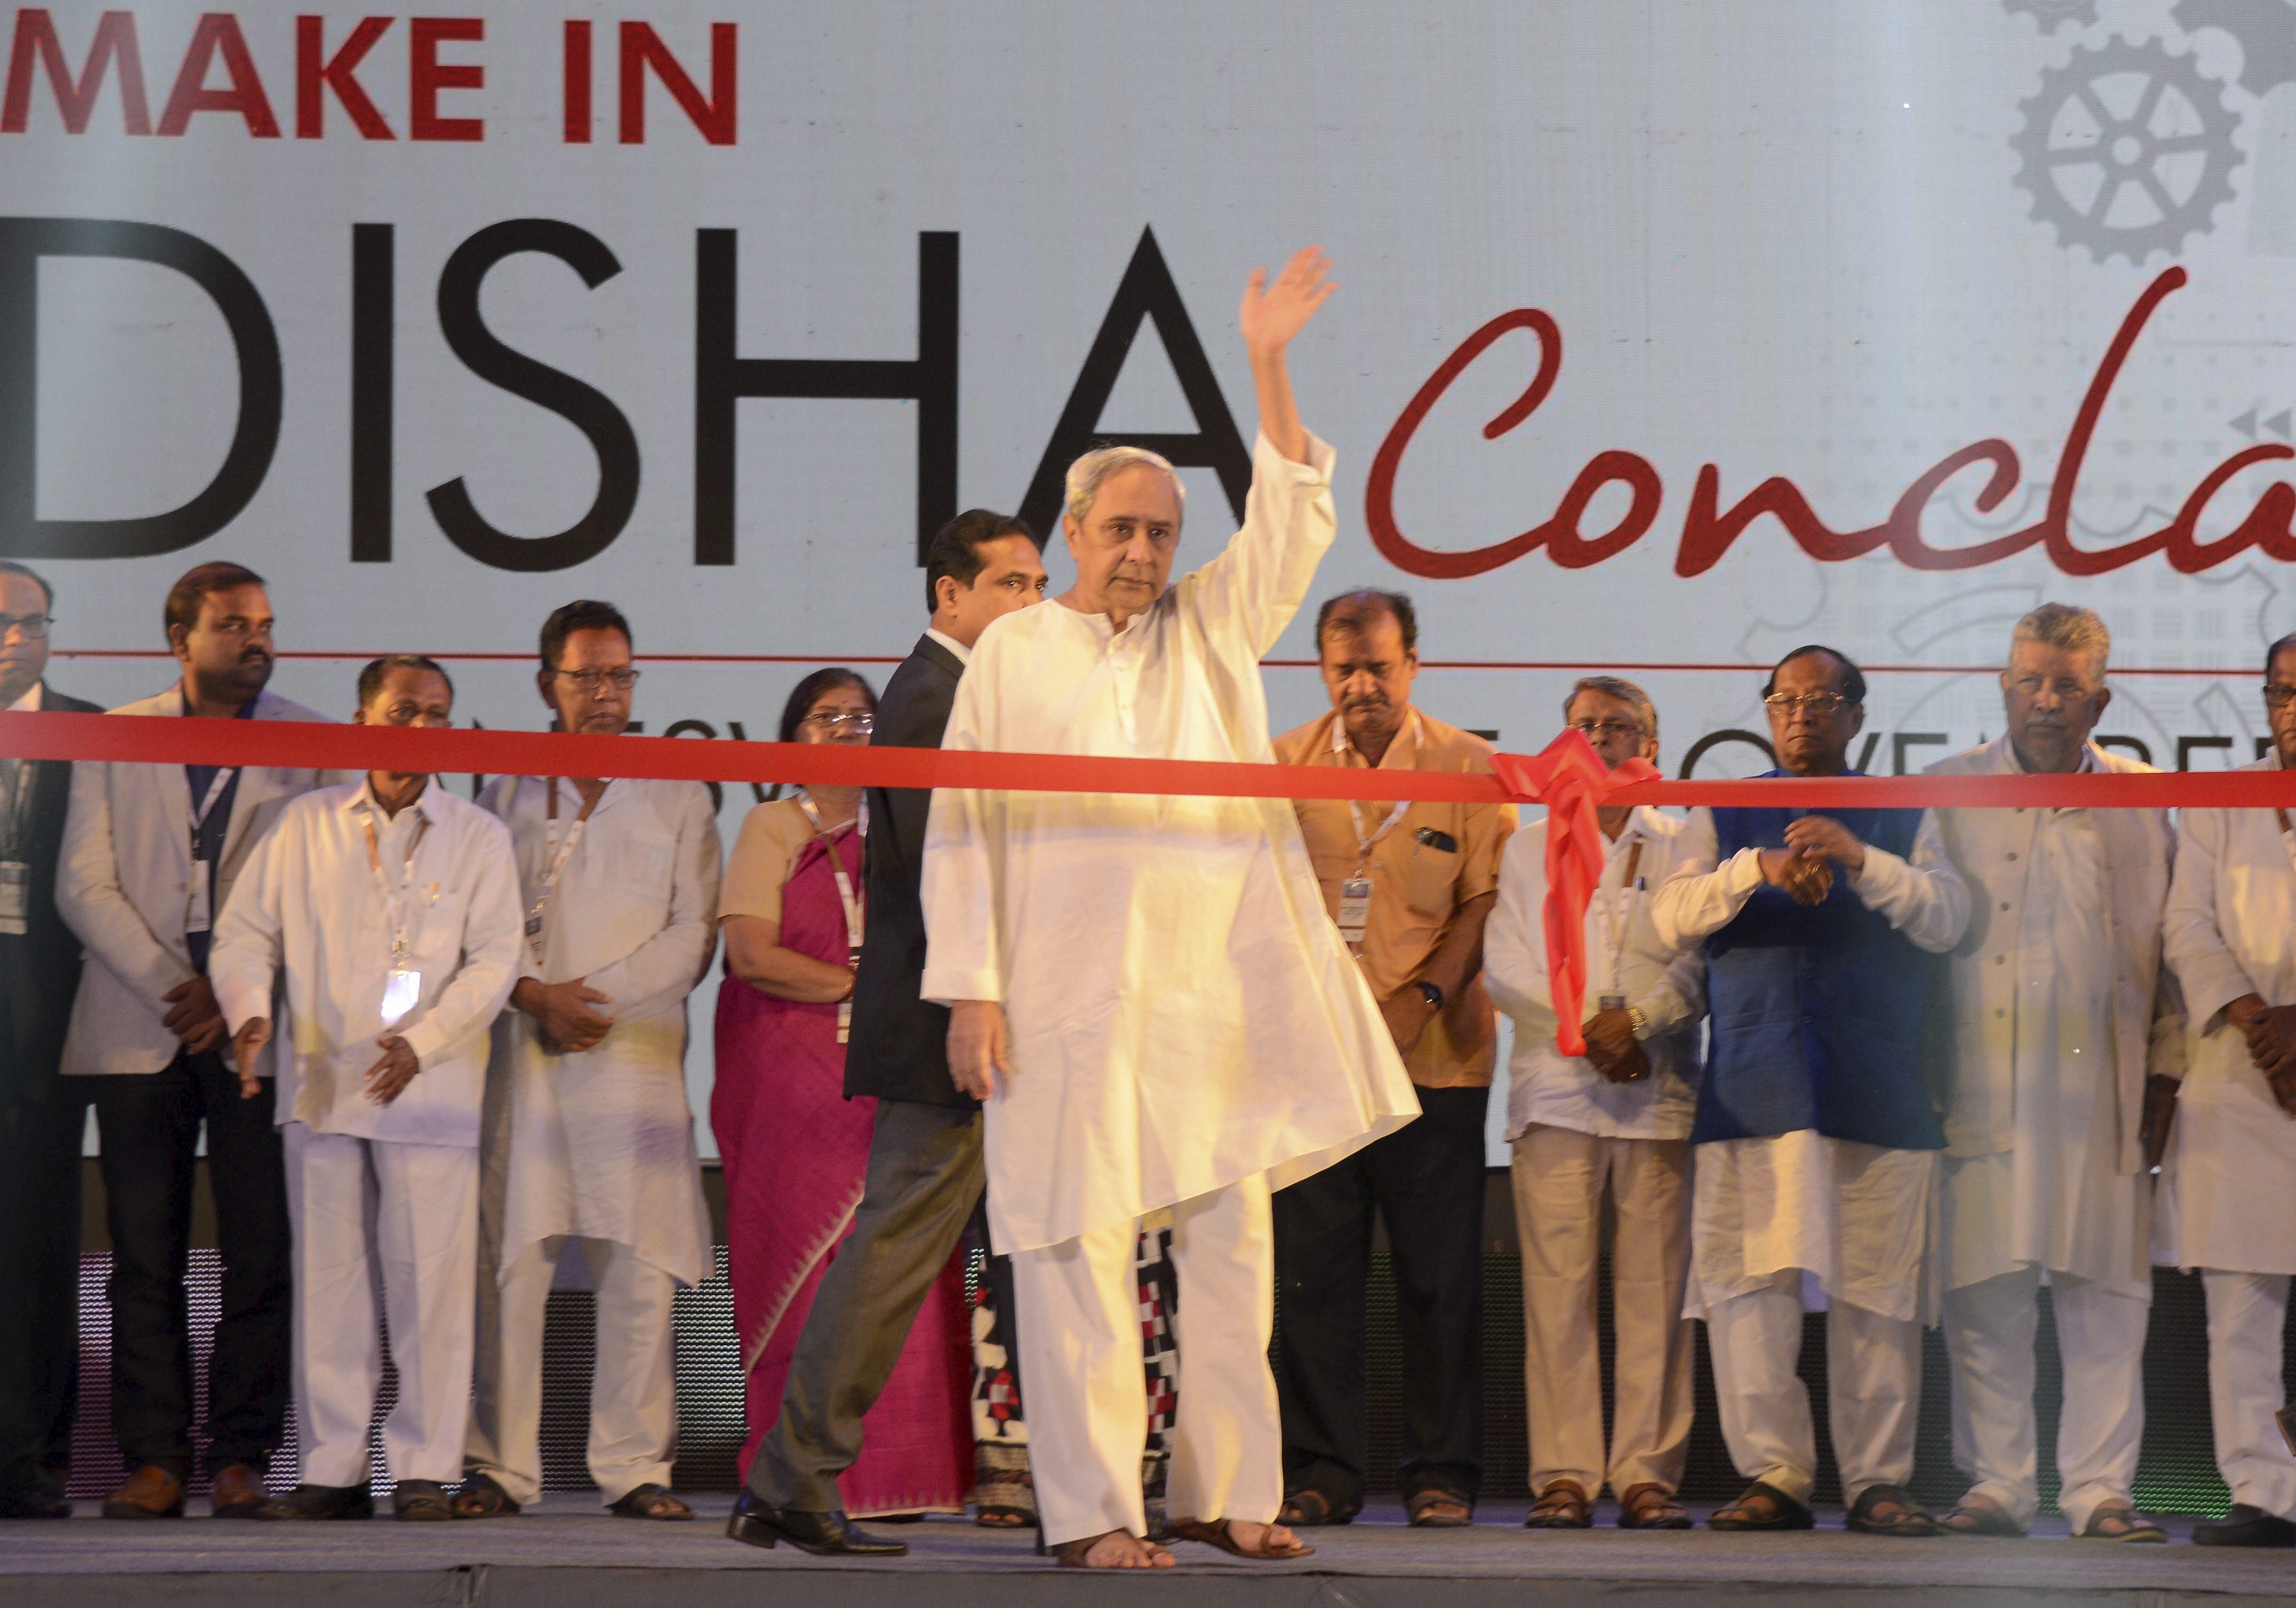 Odisha Chief Minister Naveen Patnaik waves as he inagurates Make in Odisha conclave in Bhubaneswar - PTI